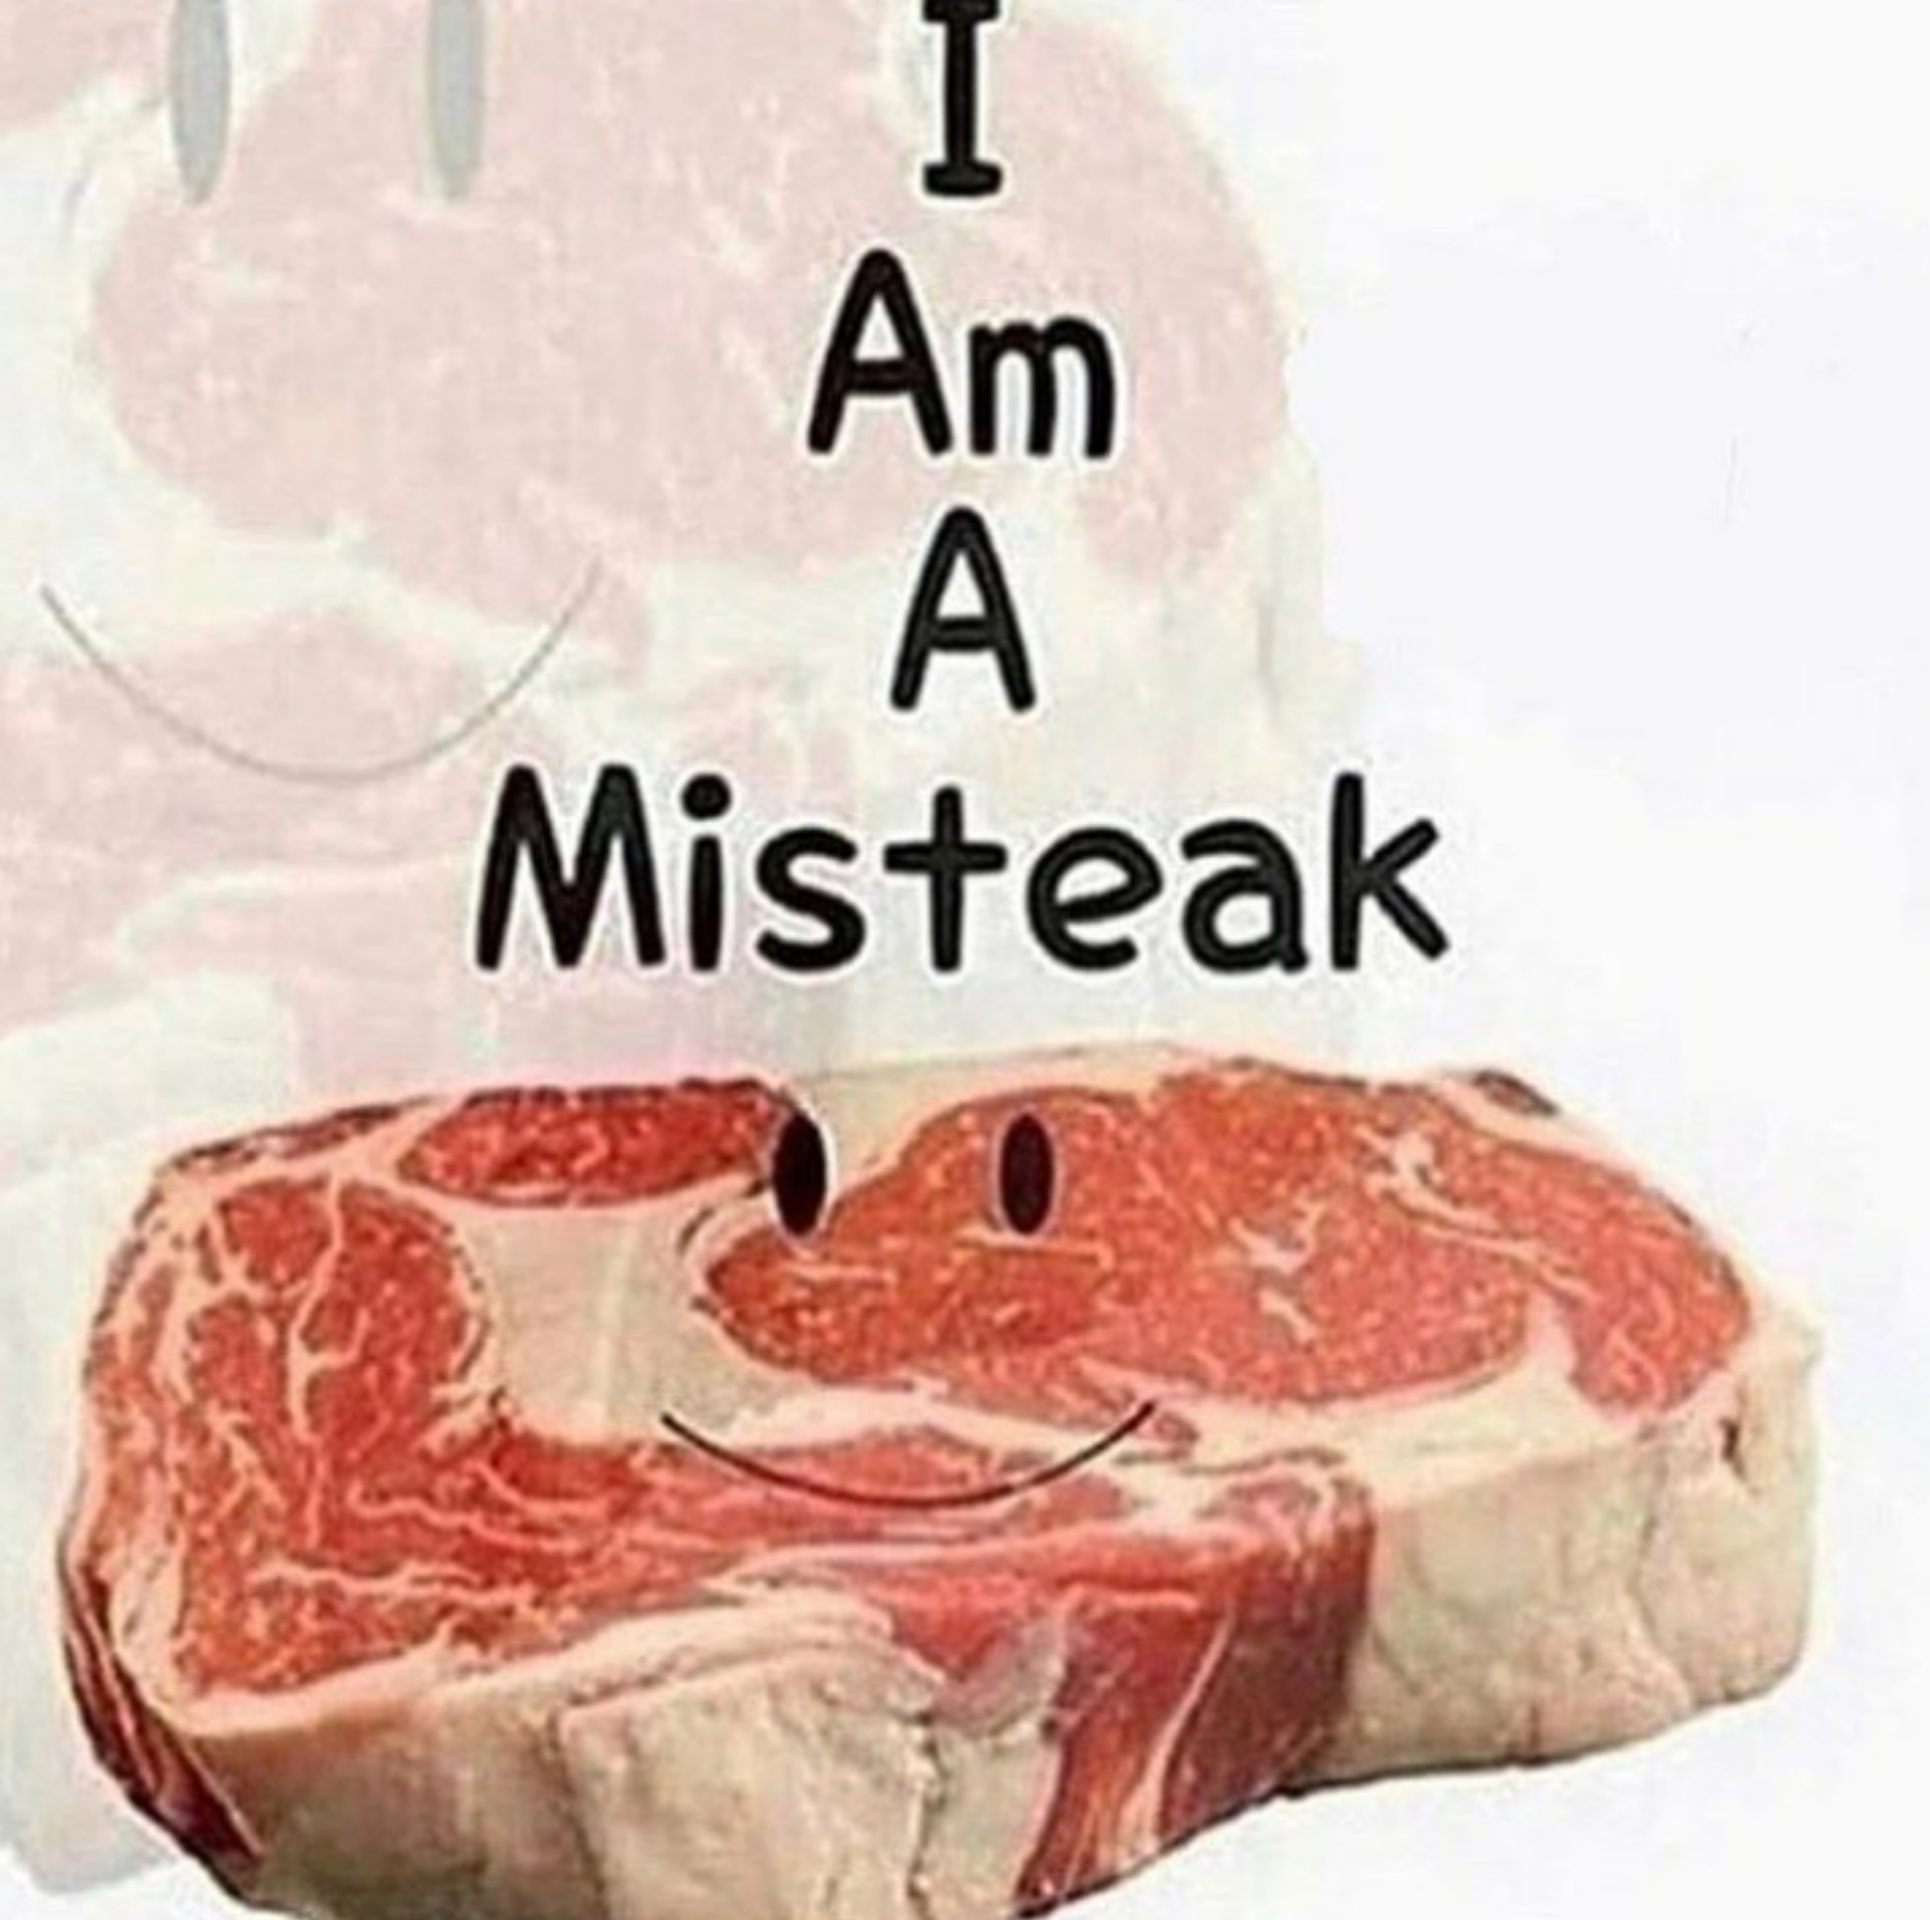 Vegan got it right, the meat always suffer